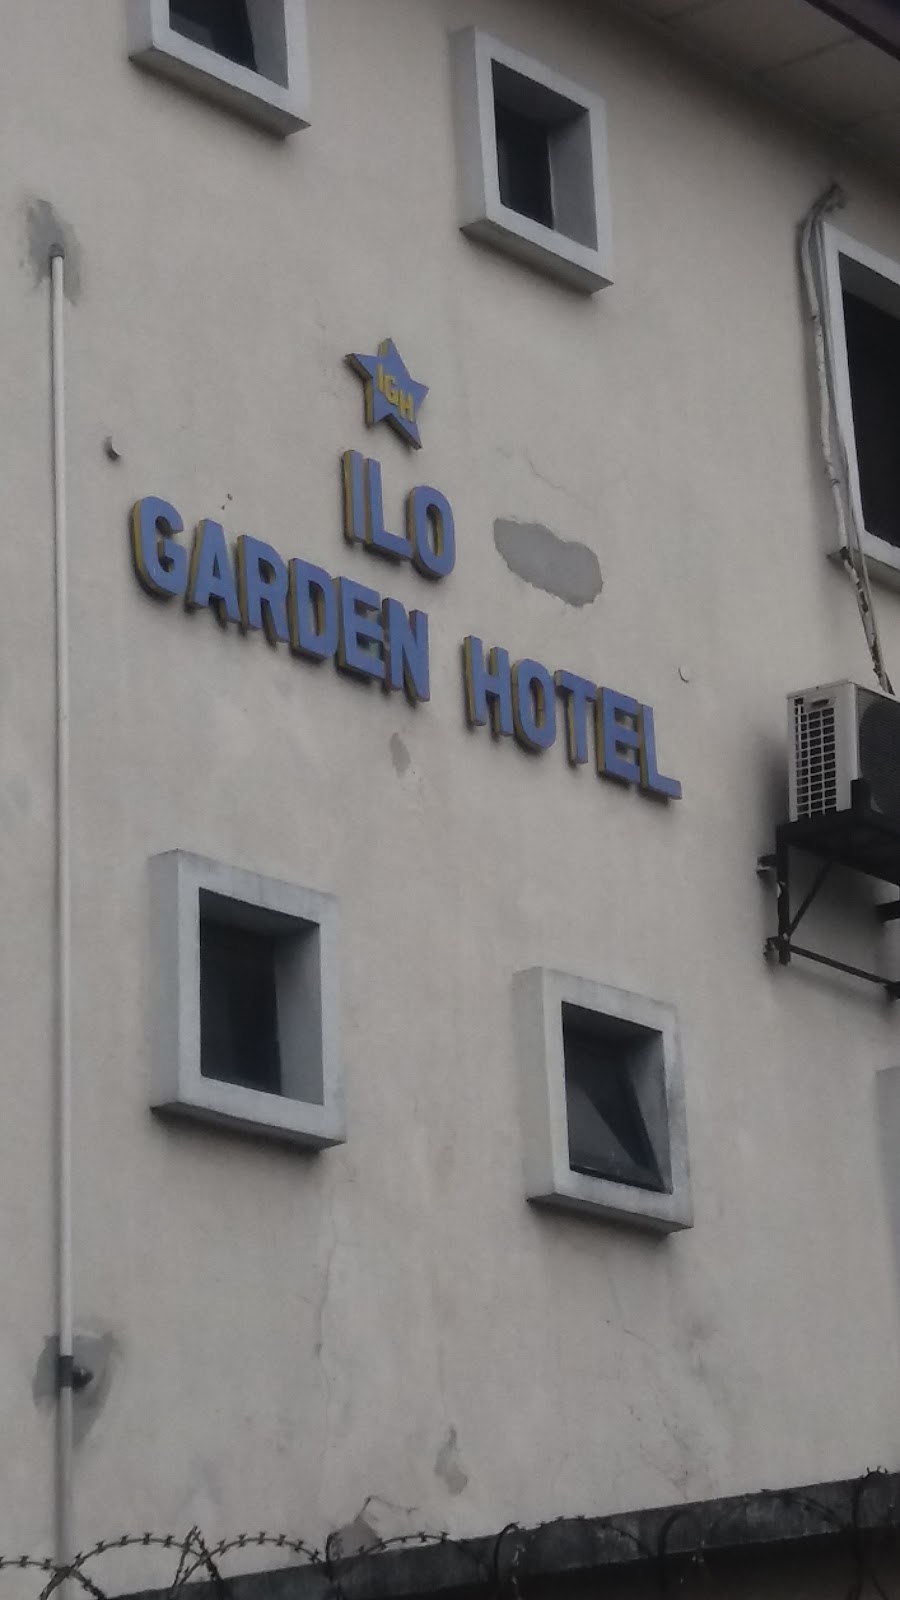 Ilo Garden Hotel